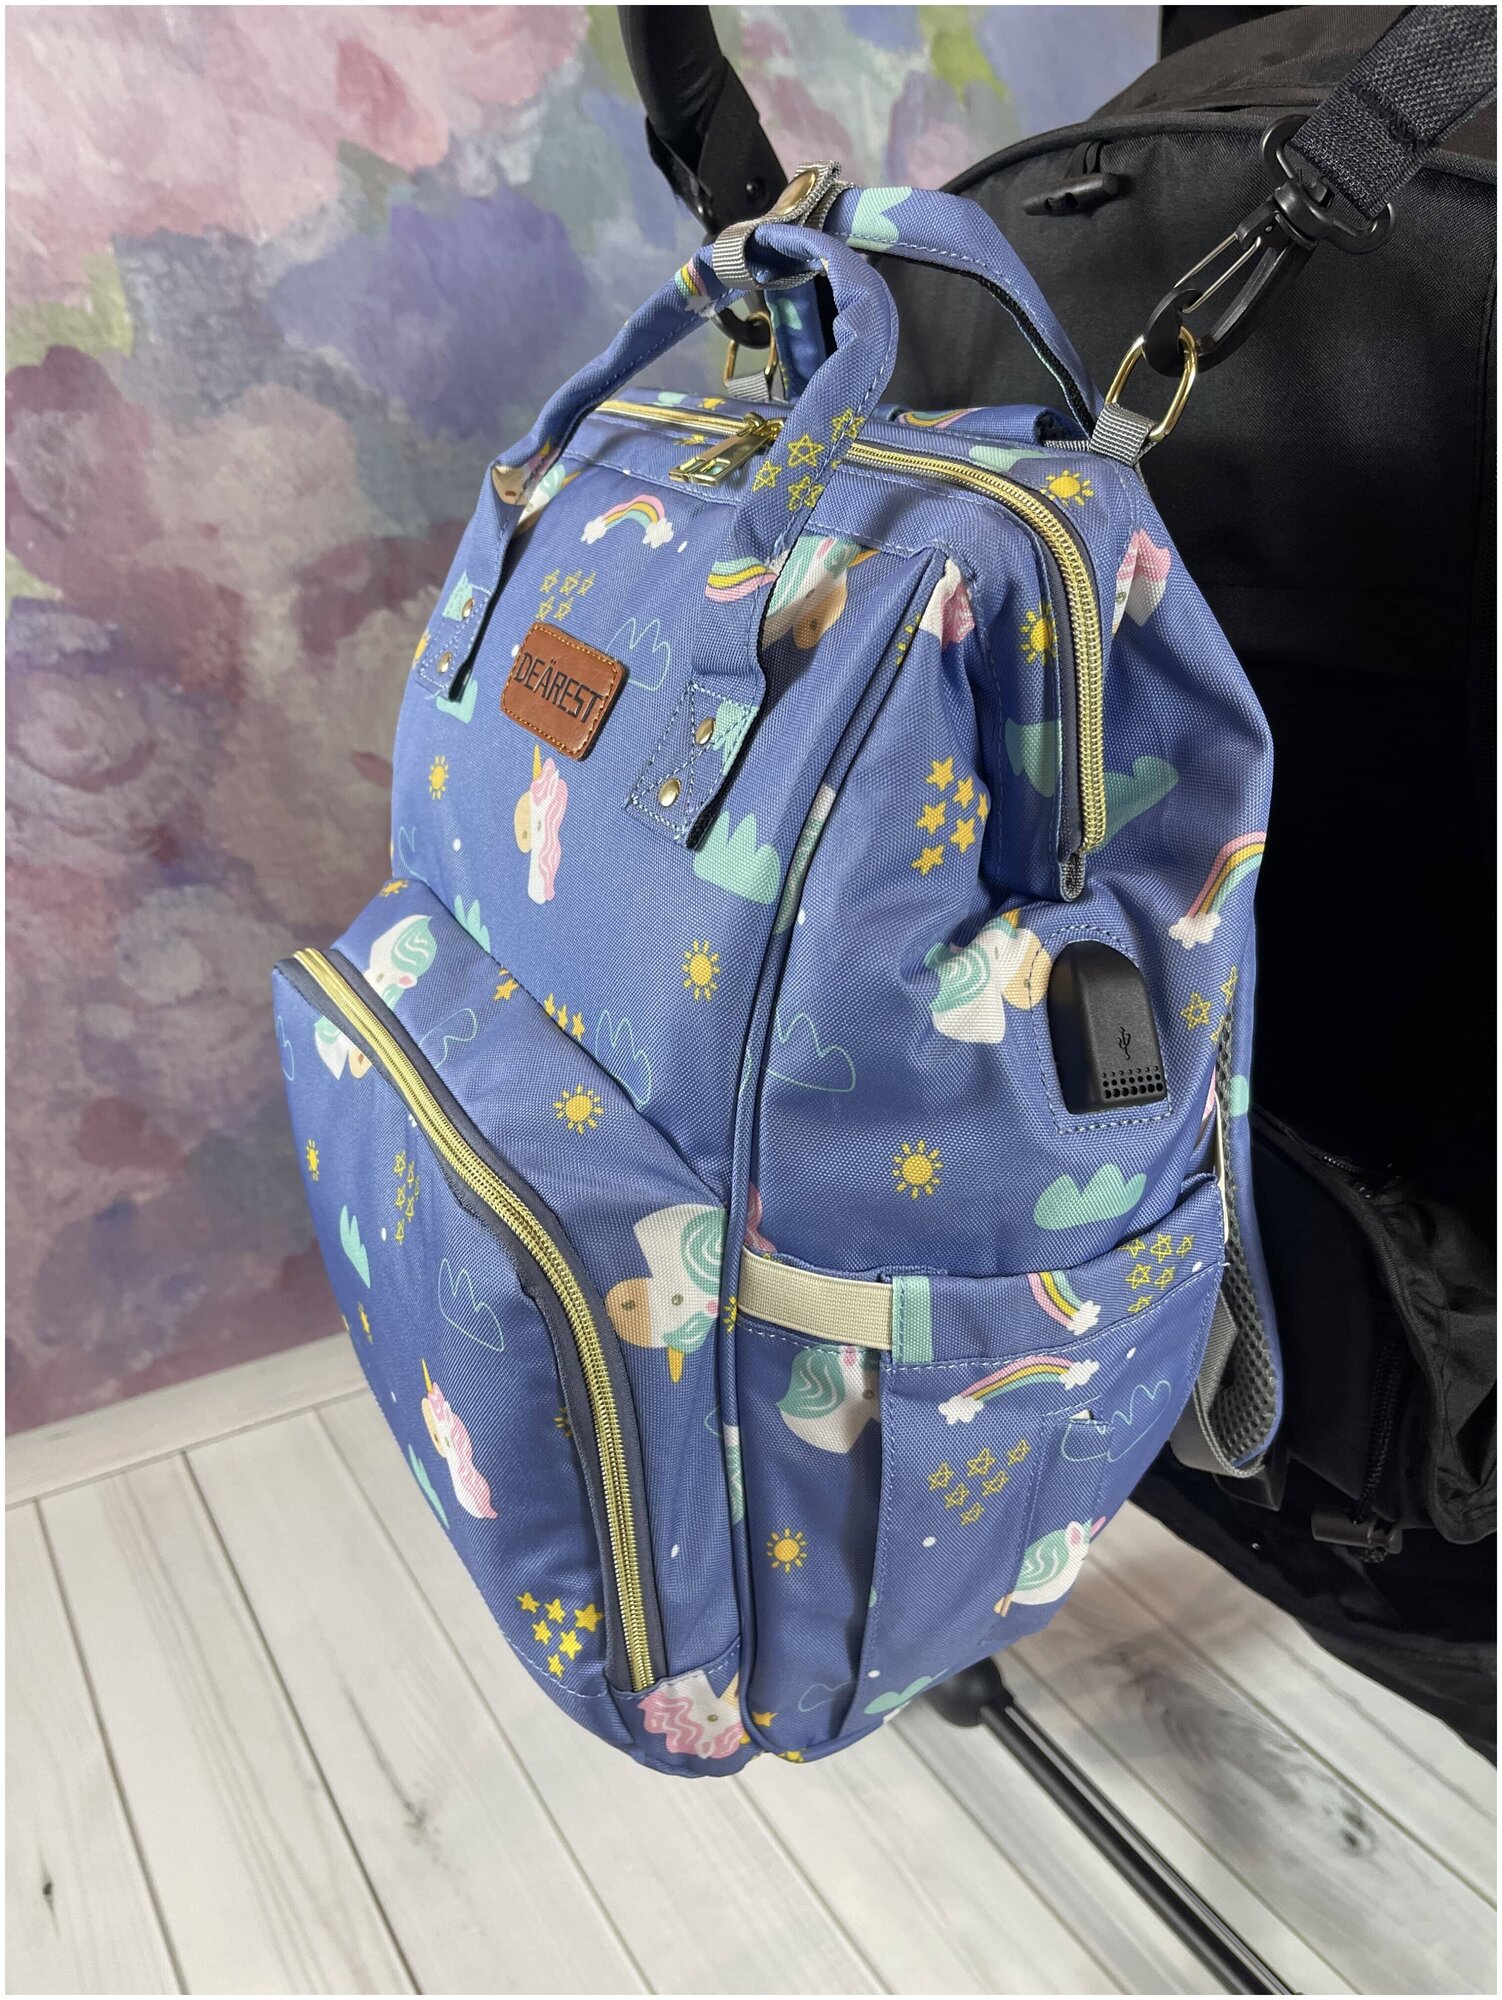 Рюкзак для мамы DEAREST c USB и термо-чехлом для бутылочки, Синий с Единорогами